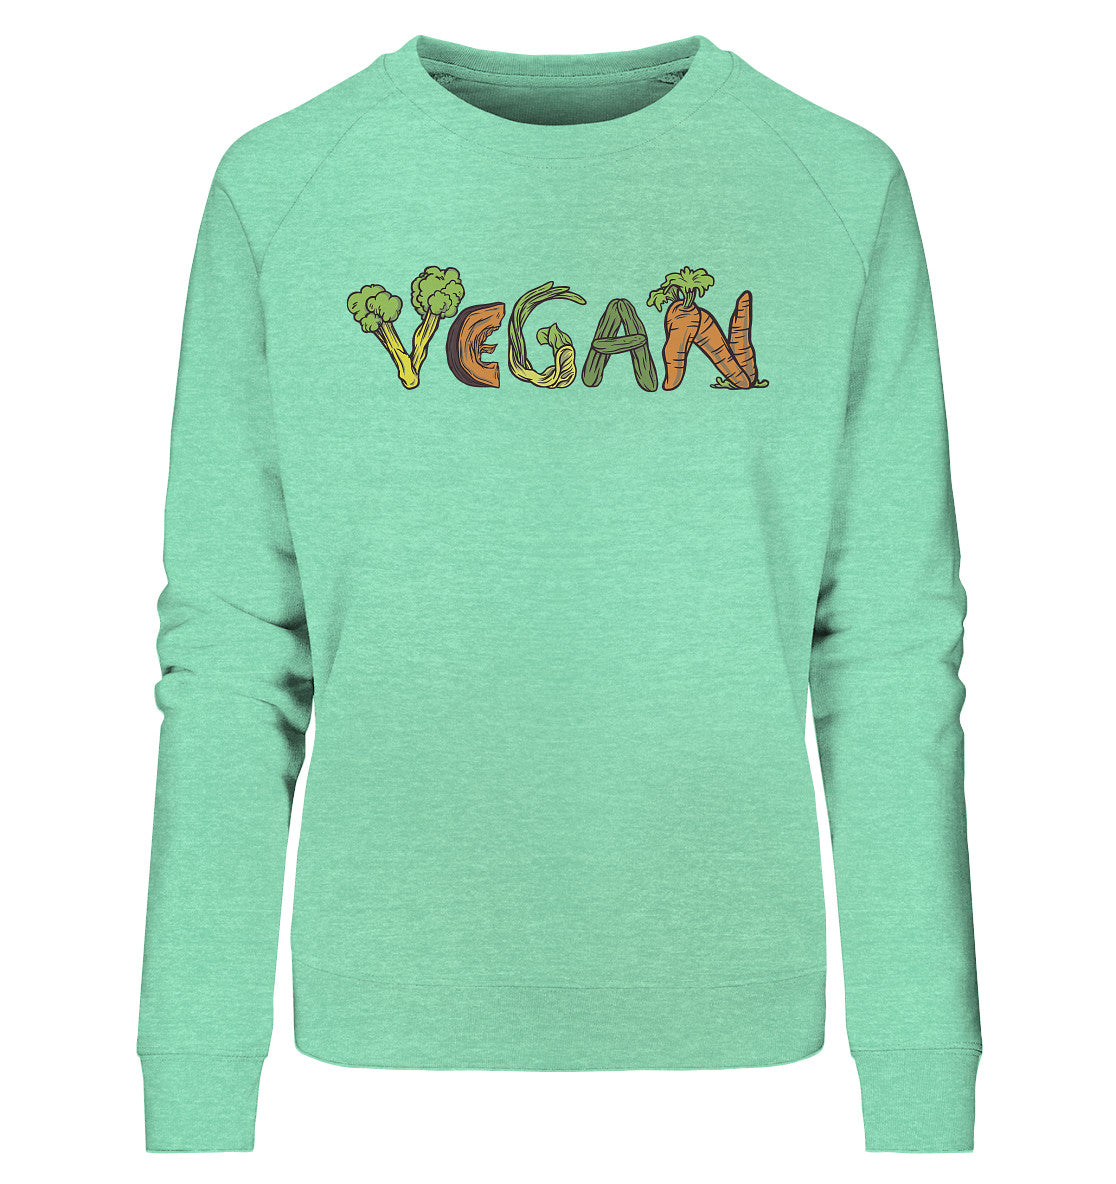 Vegan - Damen Bio Sweatshirt